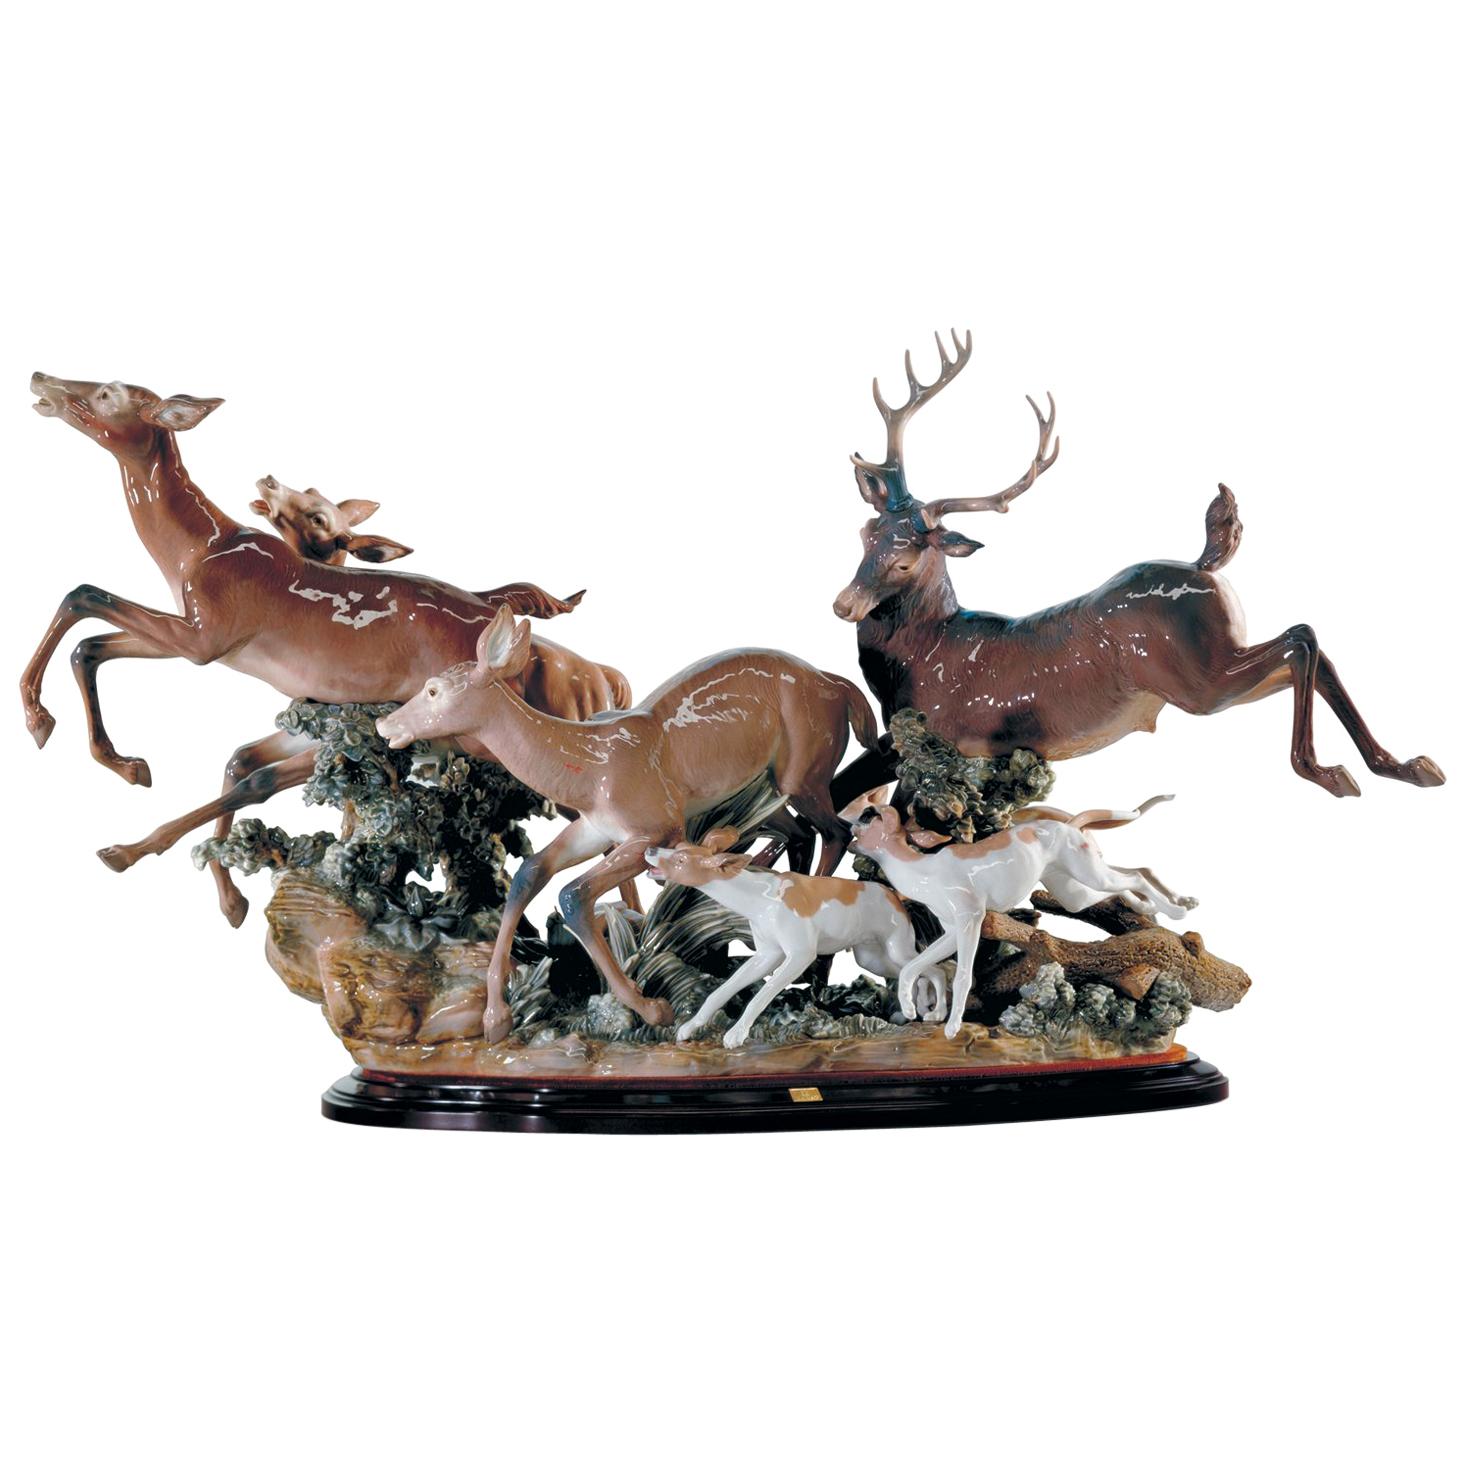 Pursued Deer Sculpture, Limited Edition For Sale